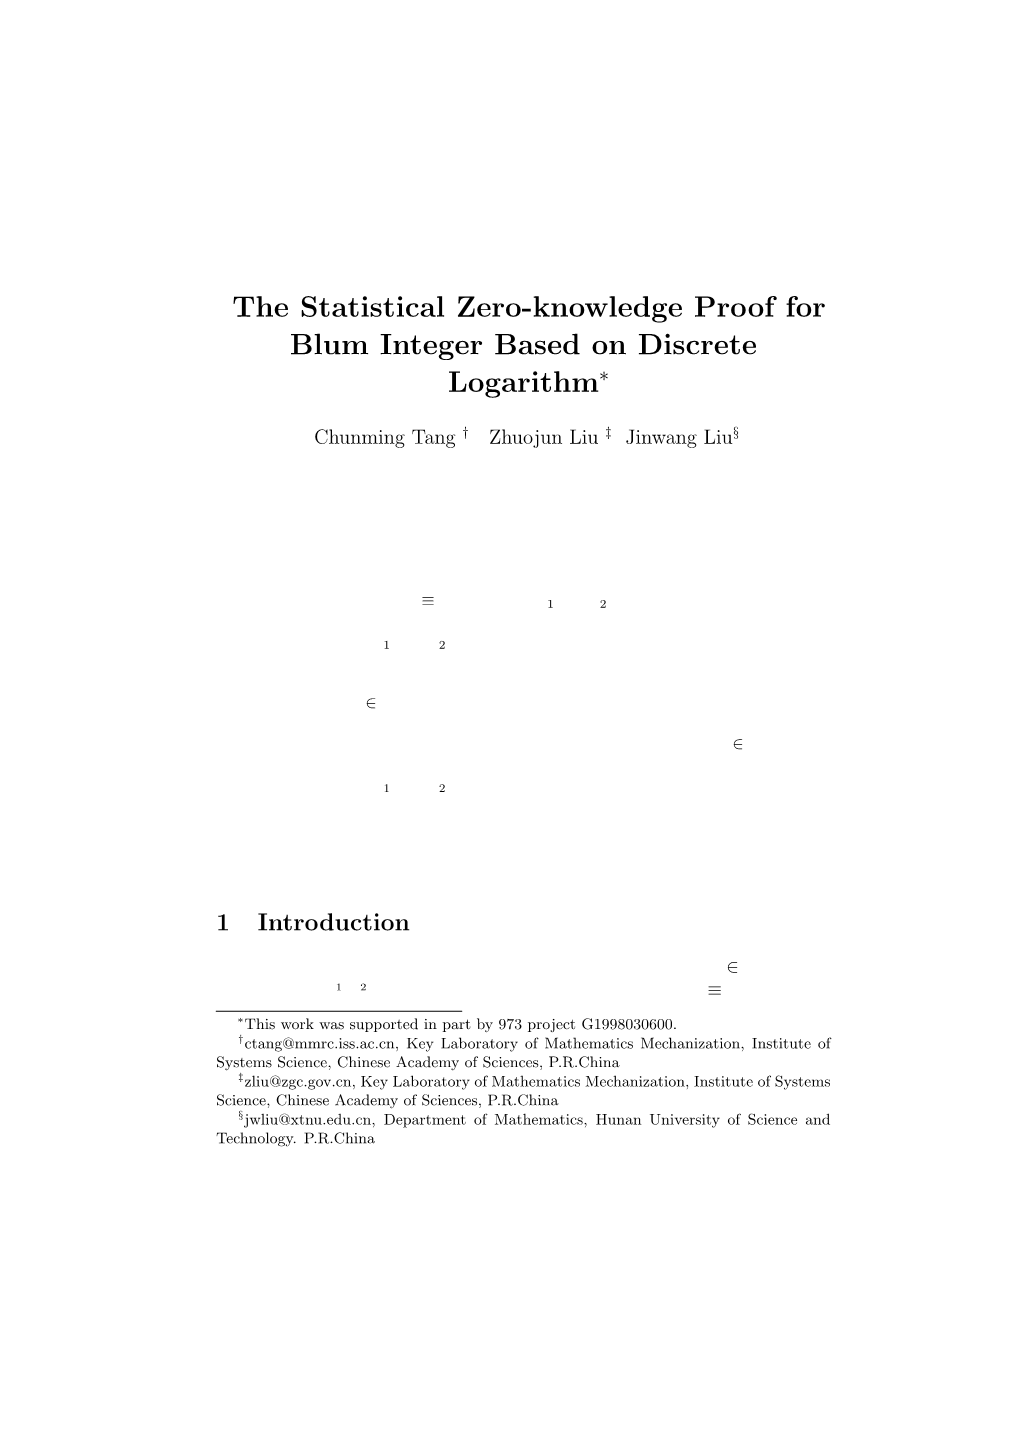 The Statistical Zero-Knowledge Proof for Blum Integer Based on Discrete Logarithm∗